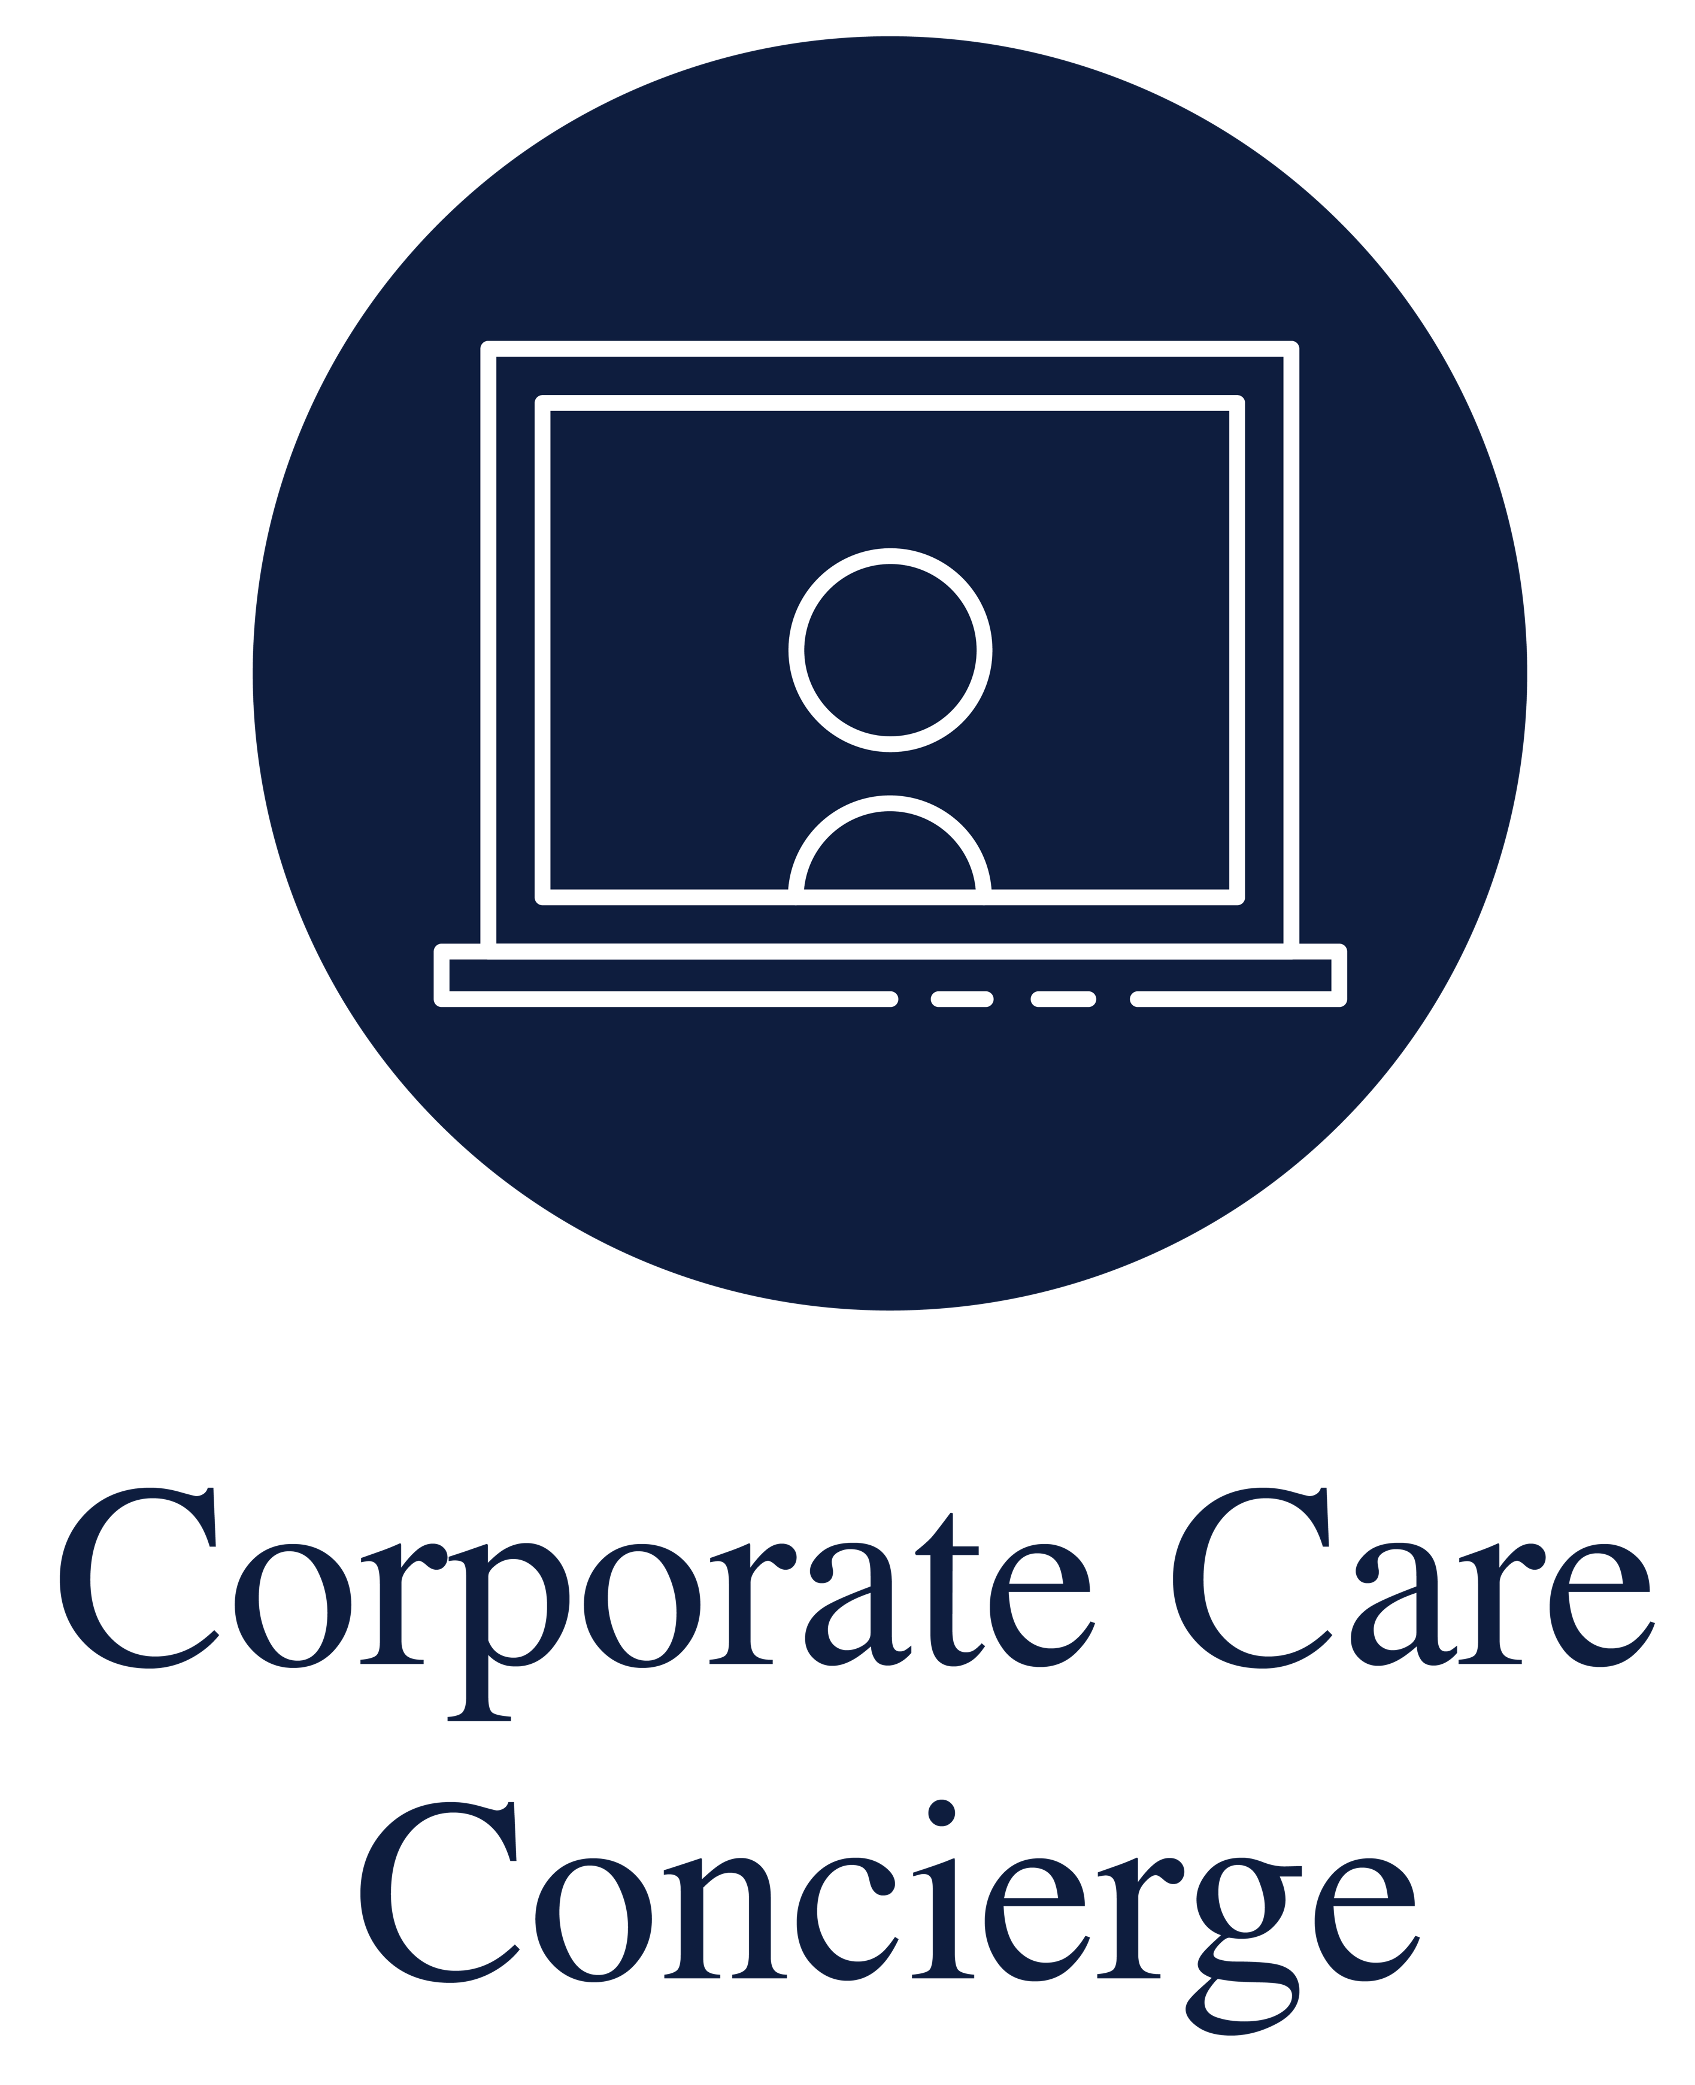 DR Care Solutions Client Testimonial on Corporate Care Concierge Services